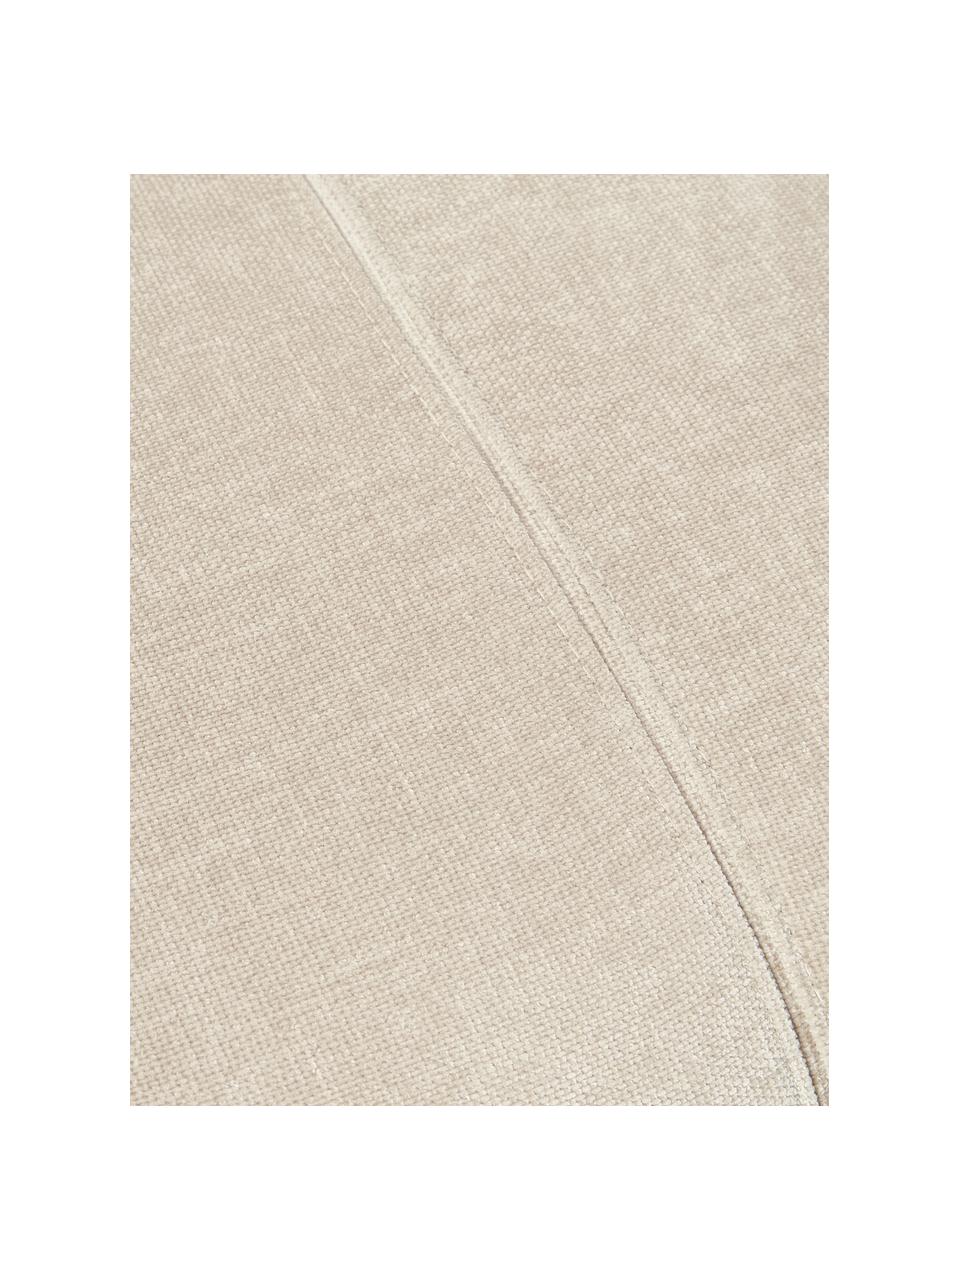 Beklede poef Marcel, Bekleding: 100% polyester Met 30.000, Frame: metaal, Geweven stof lichtbeige, zilverkleurig, B 50 x H 43 cm